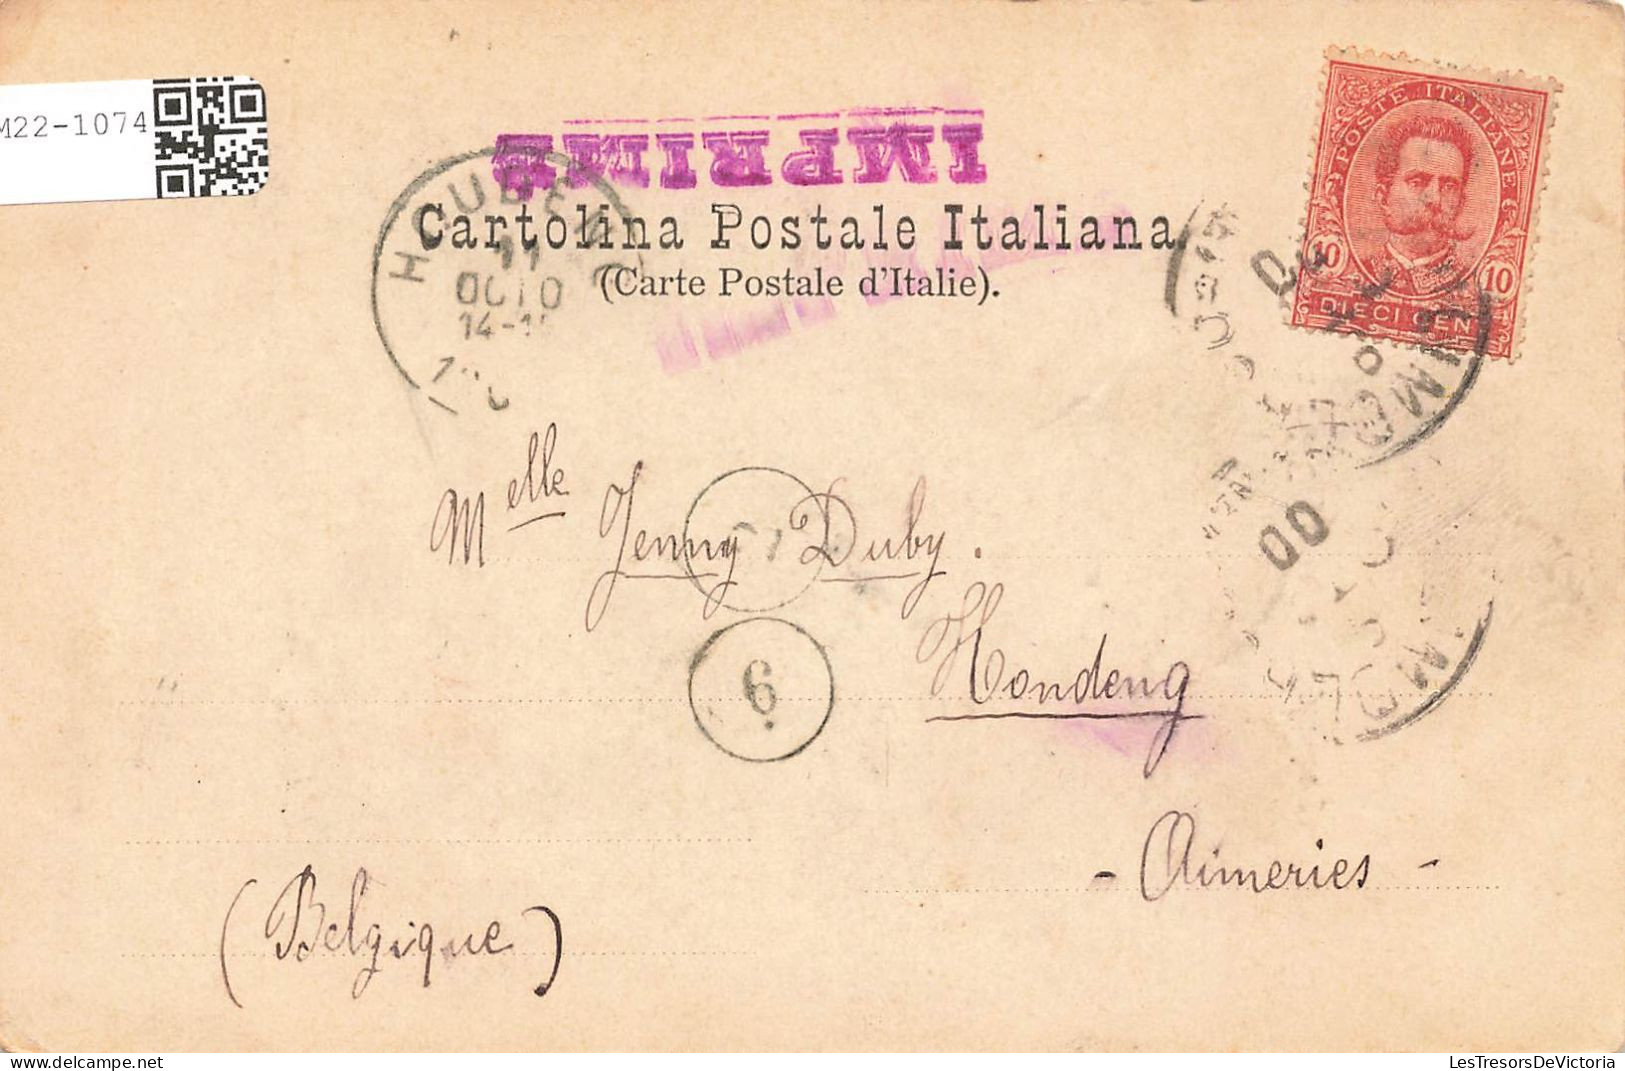 ITALIE - Spilimbergo - Ancona Sul Tagliamento - Carte Postale Ancienne - Pordenone